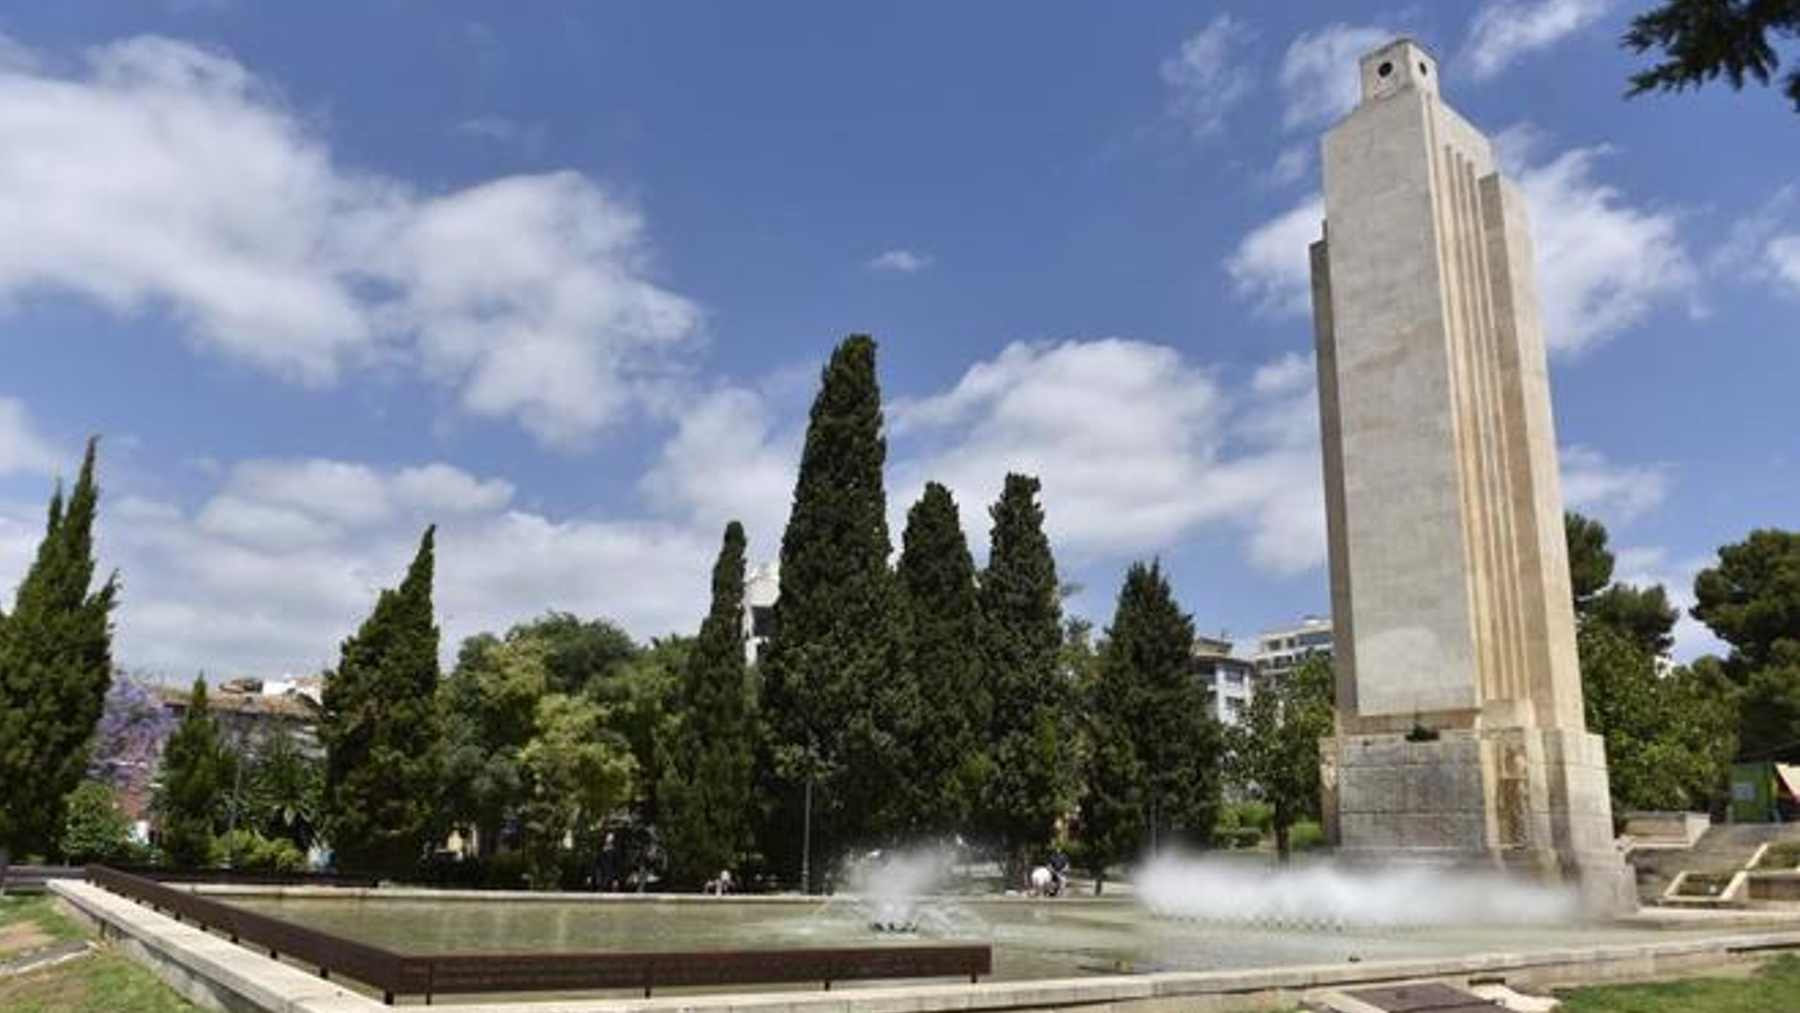 Monumento de homenaje al crucero Baleares en la plaza de Sa Feixina de Palma.